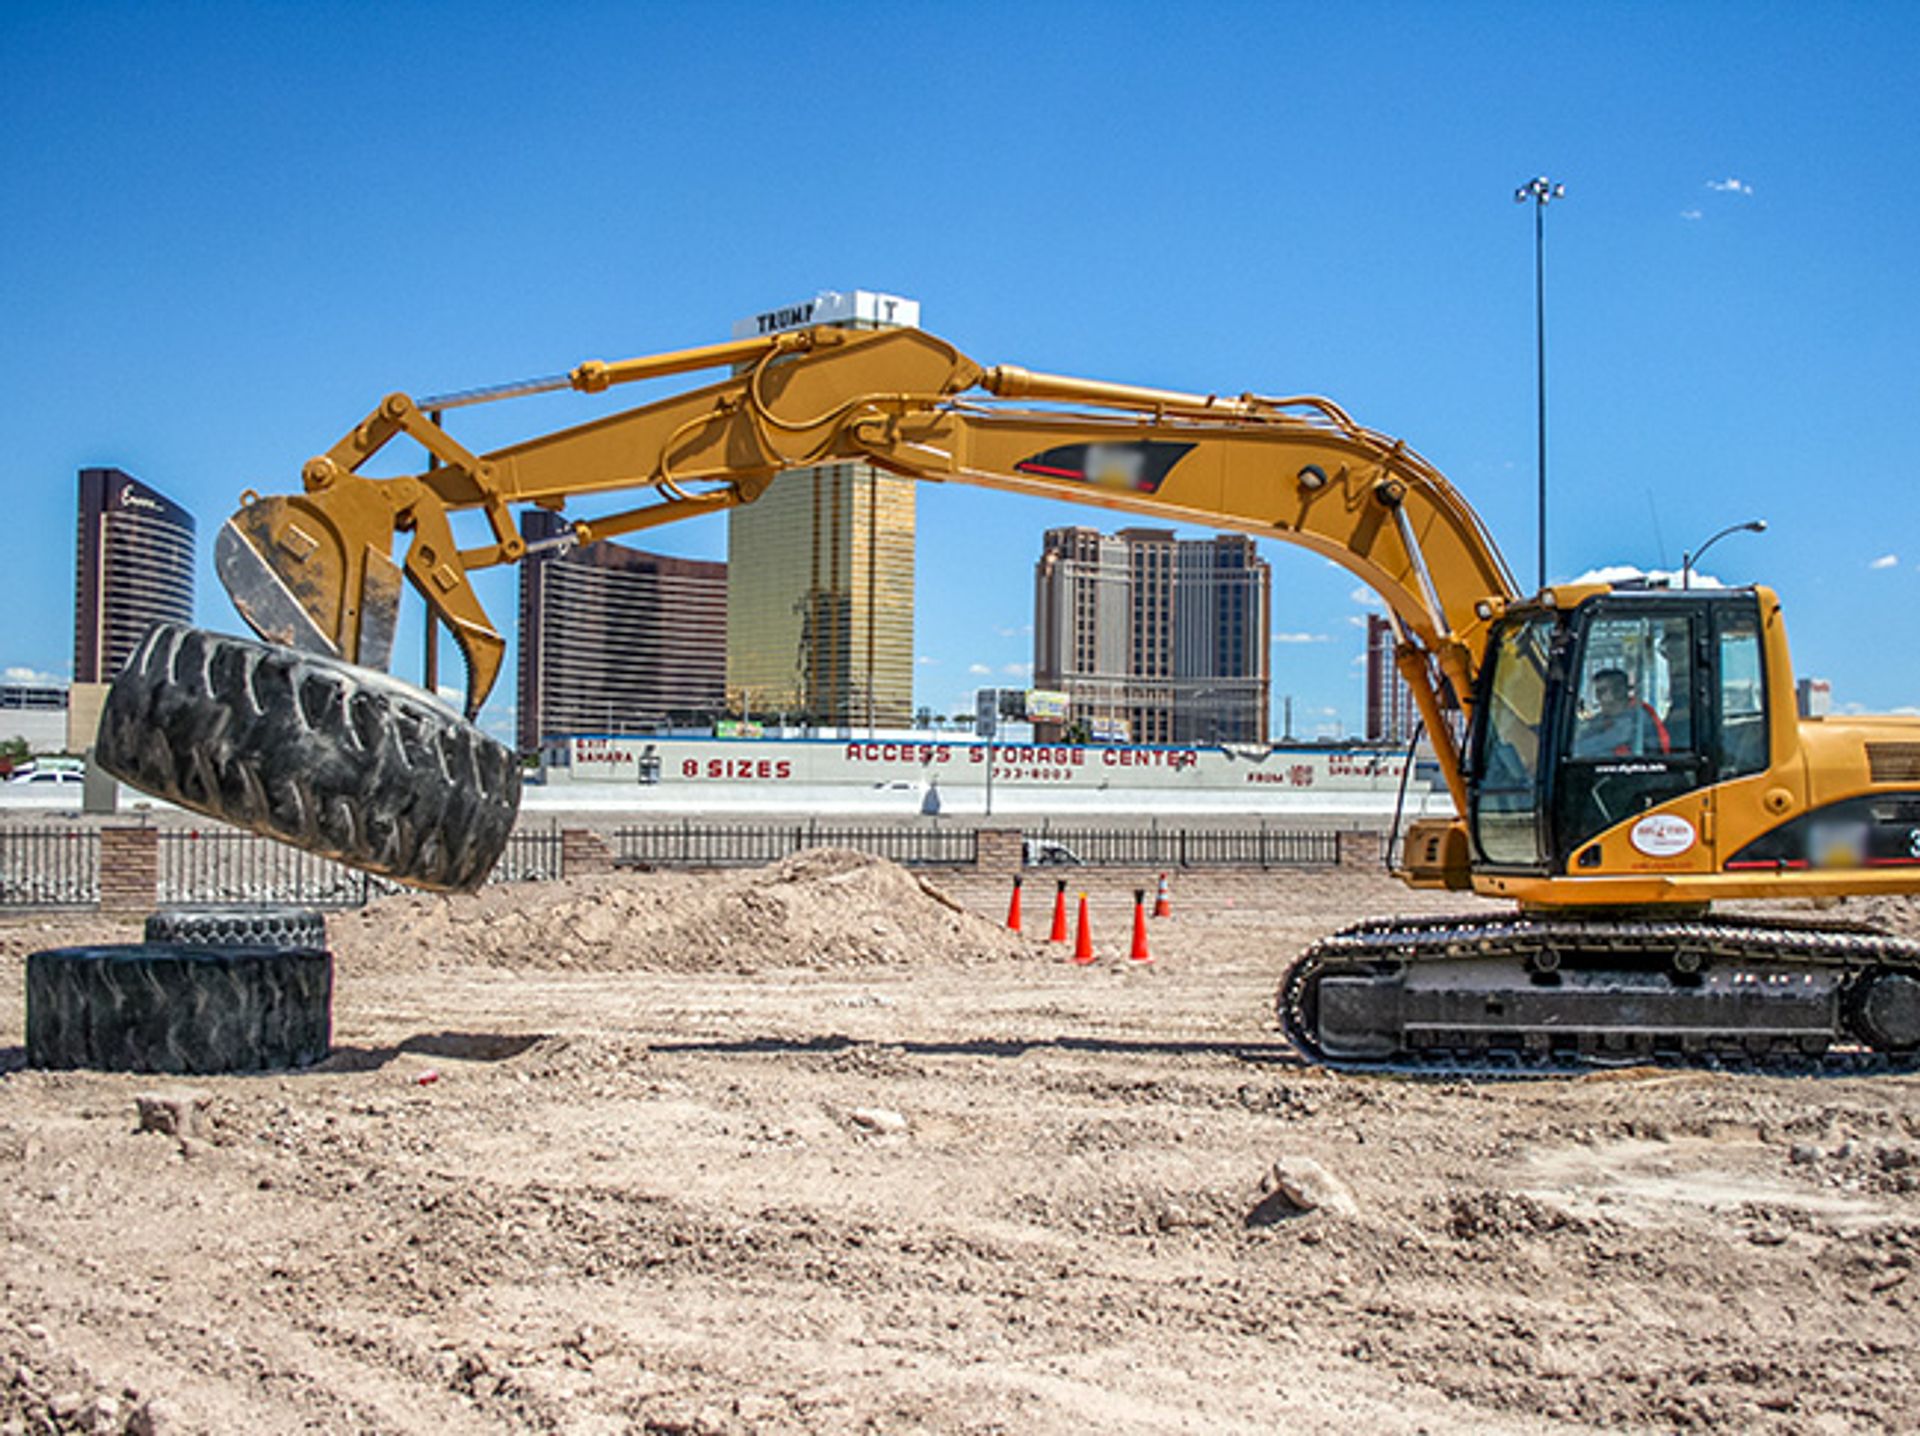 Terreinwagen Dig This Las Vegas